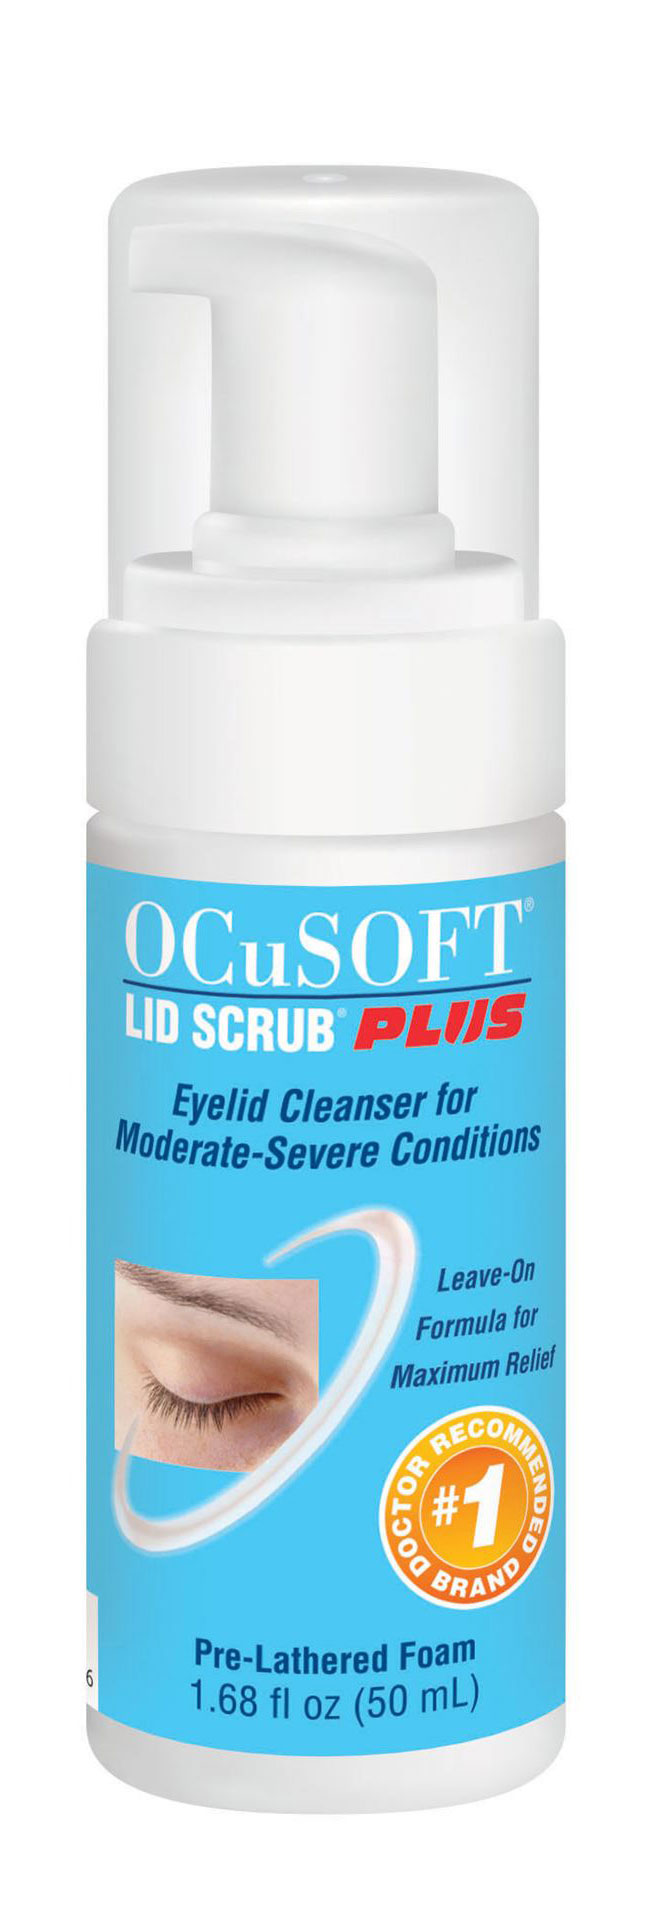 OCuSOFT® Lid Scrub Plus Foam